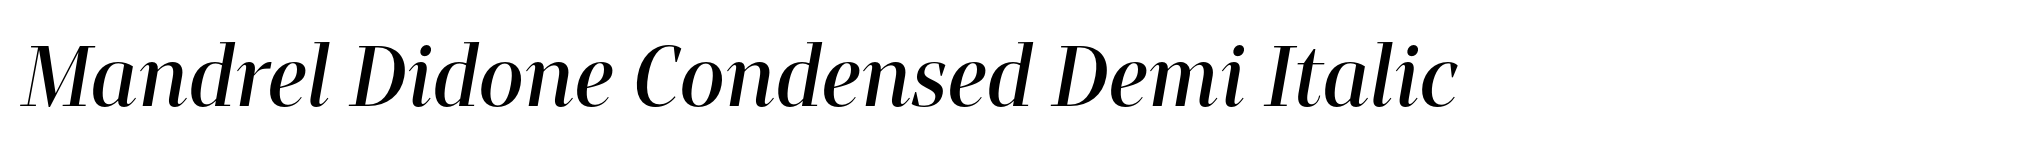 Mandrel Didone Condensed Demi Italic image